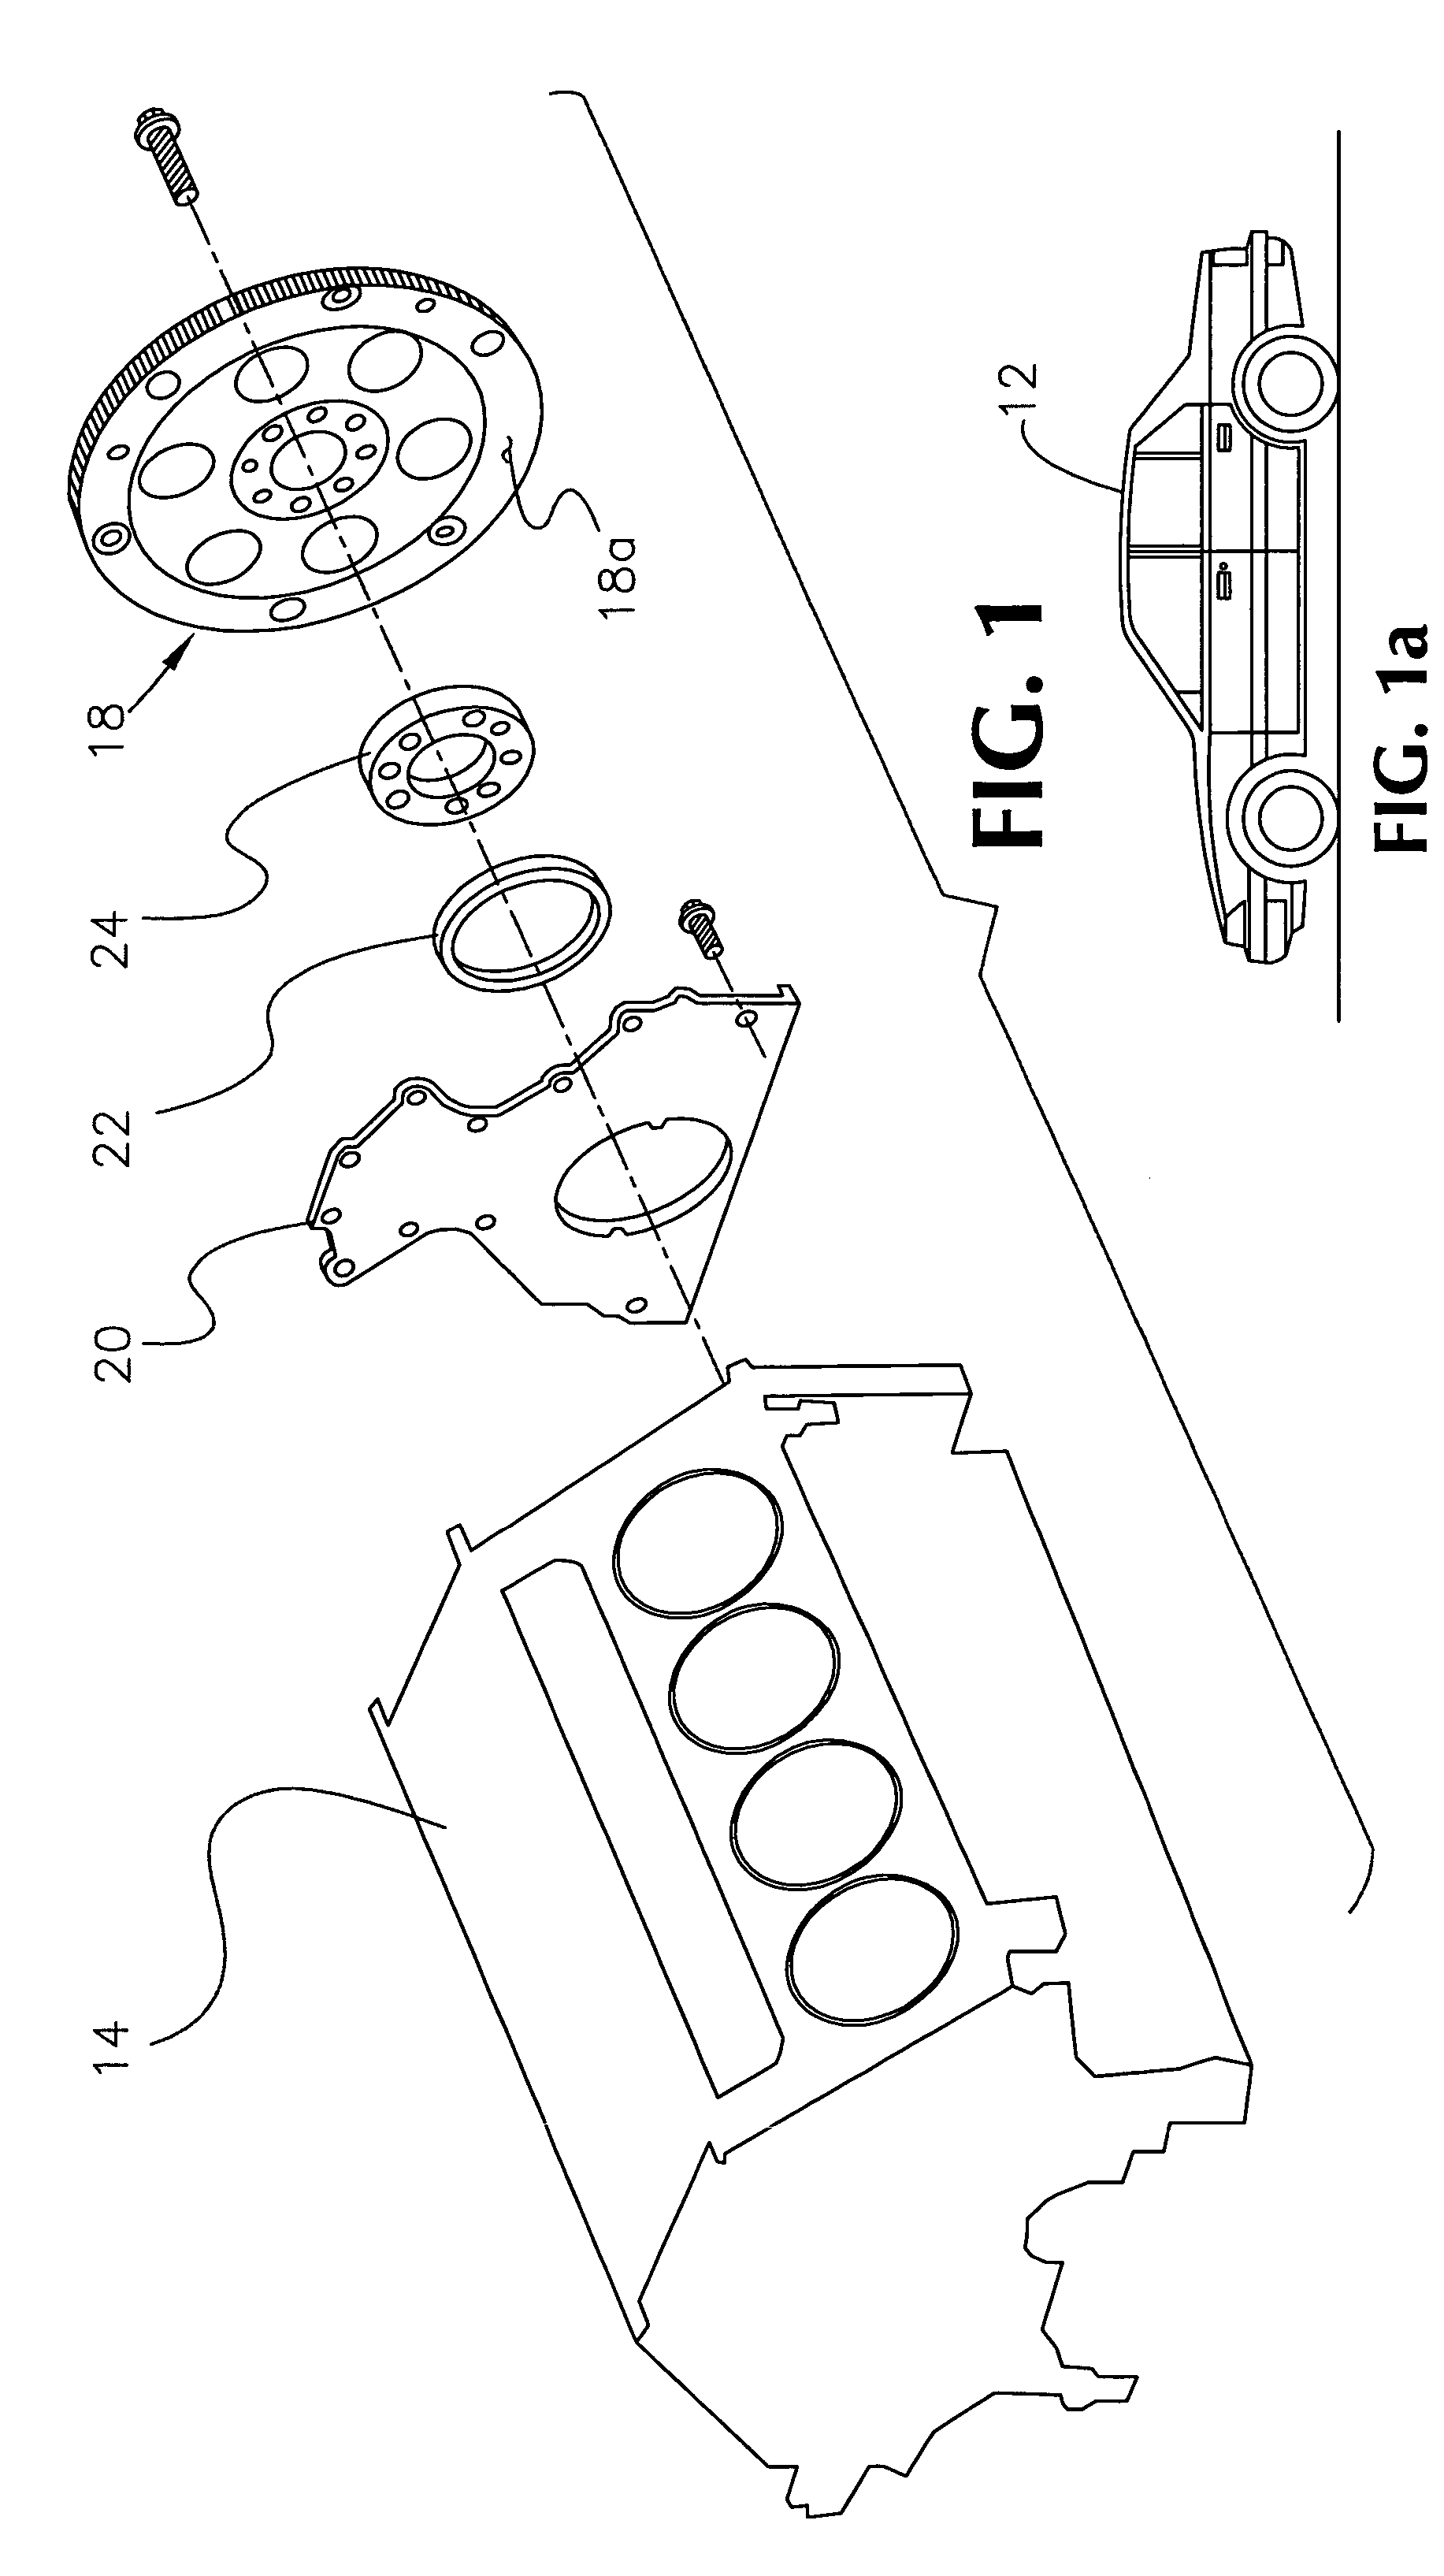 Method and apparatus for engine torque sensing